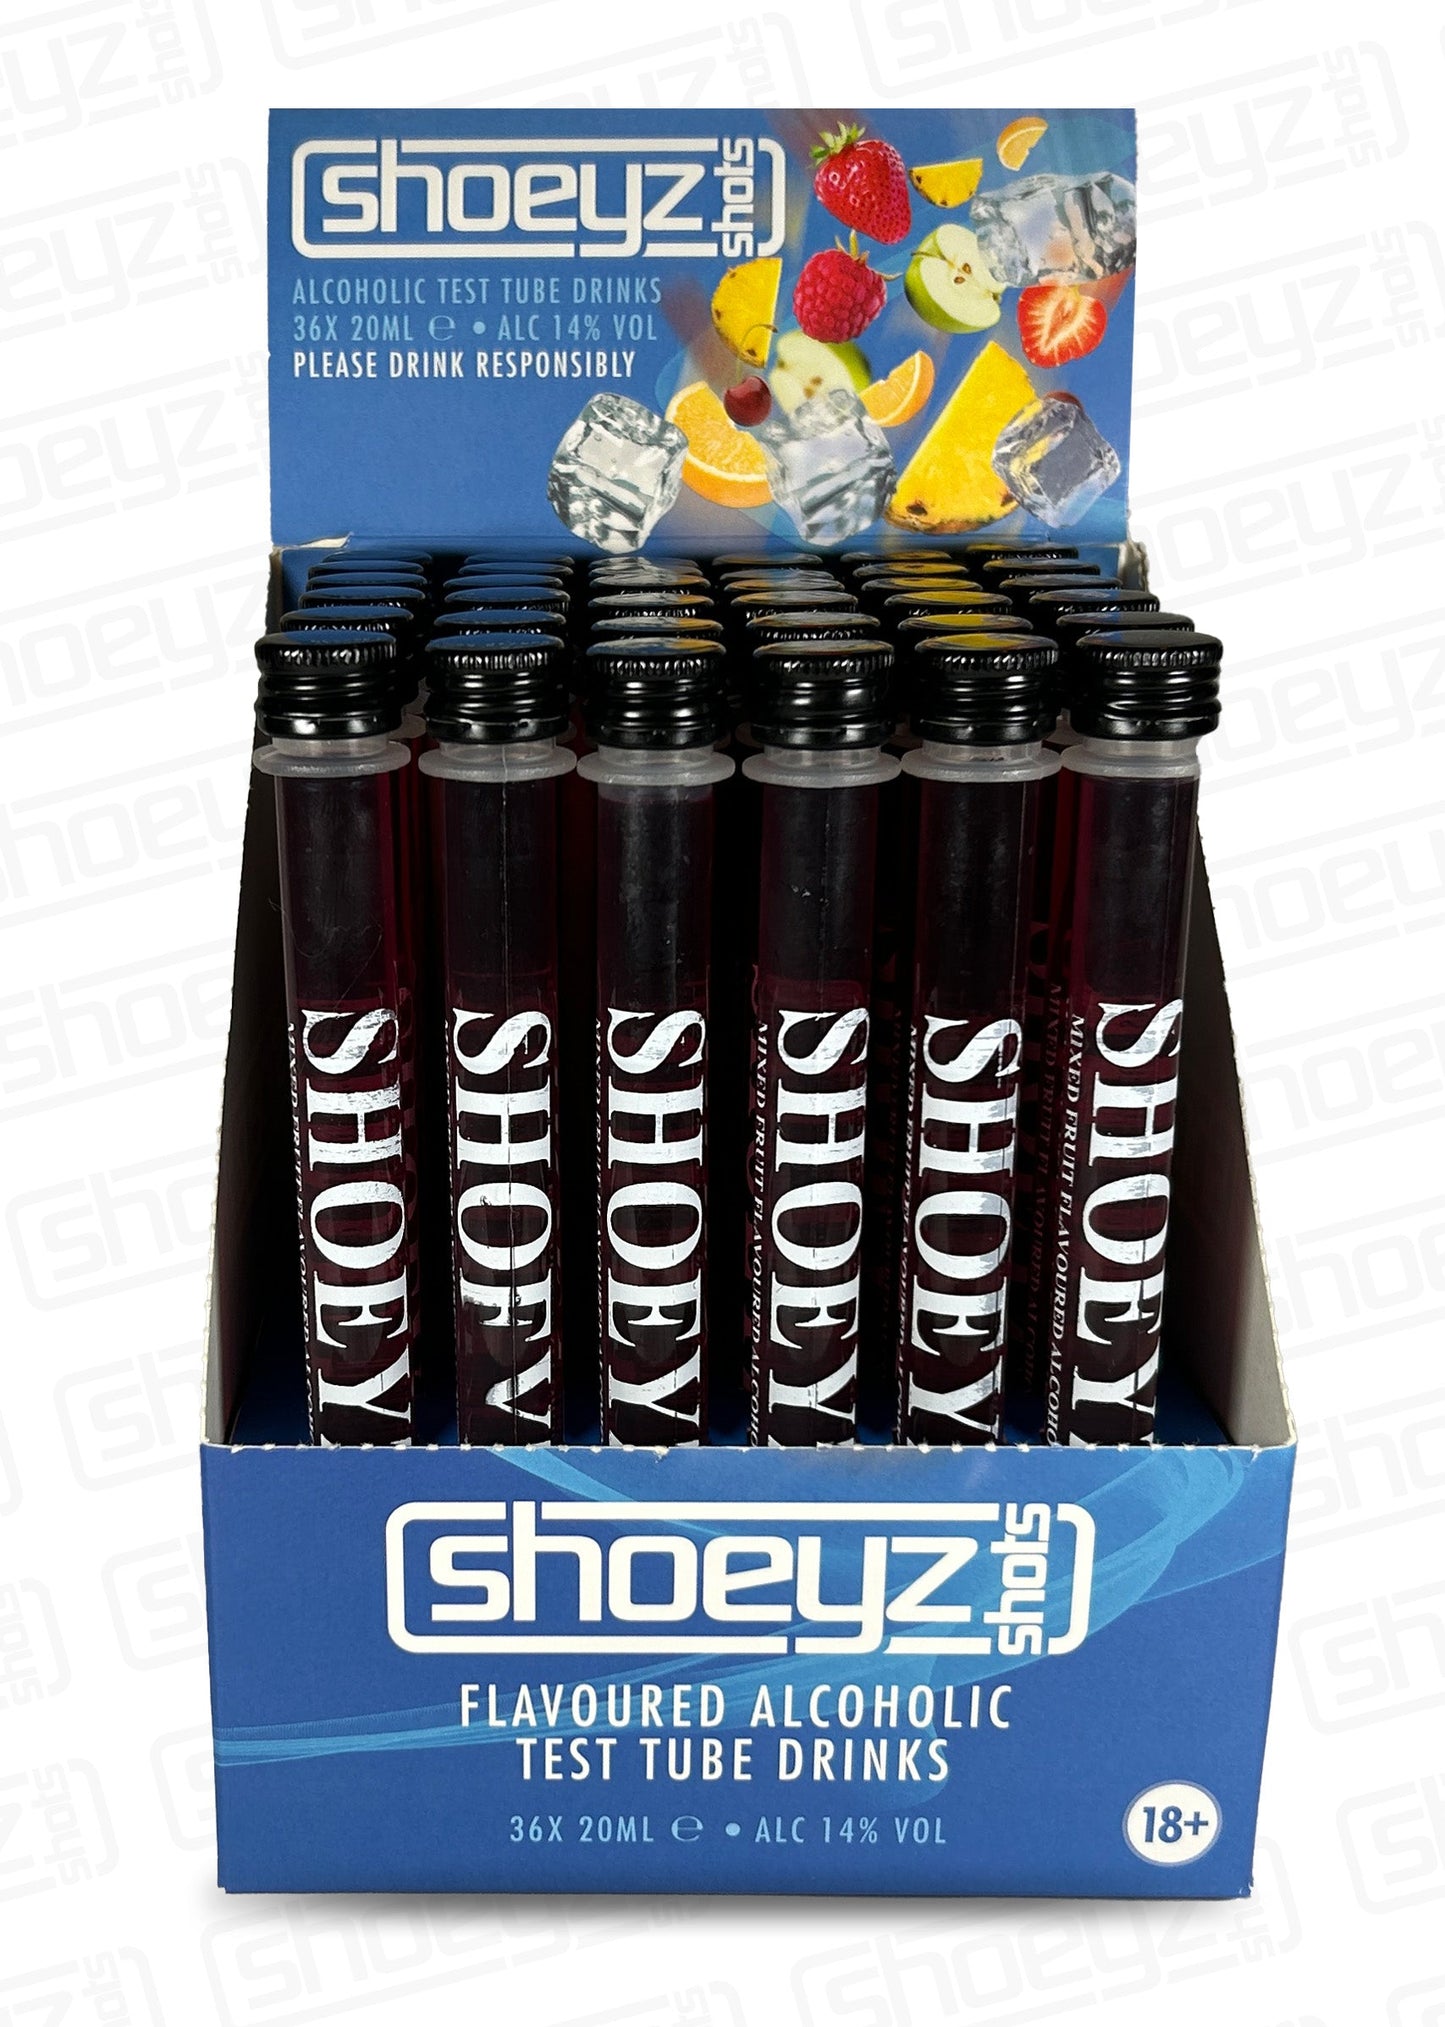 shoeyz vodka test tube shots mixed fruit